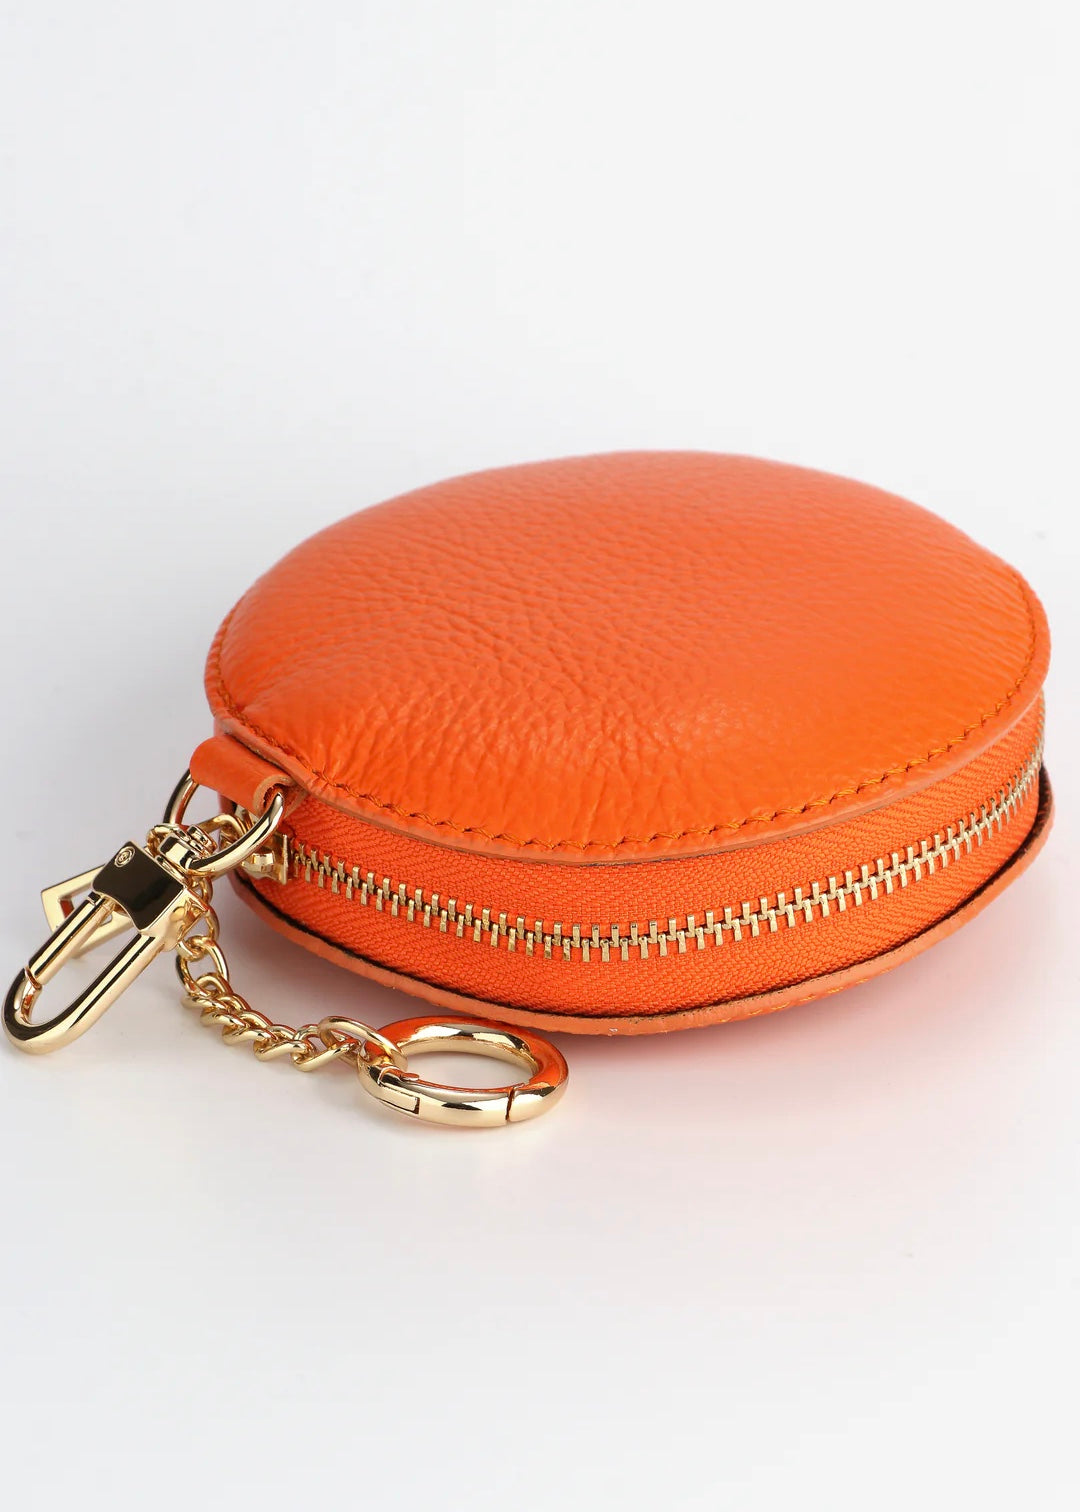 Sands - Leather Coin Purse / Orange